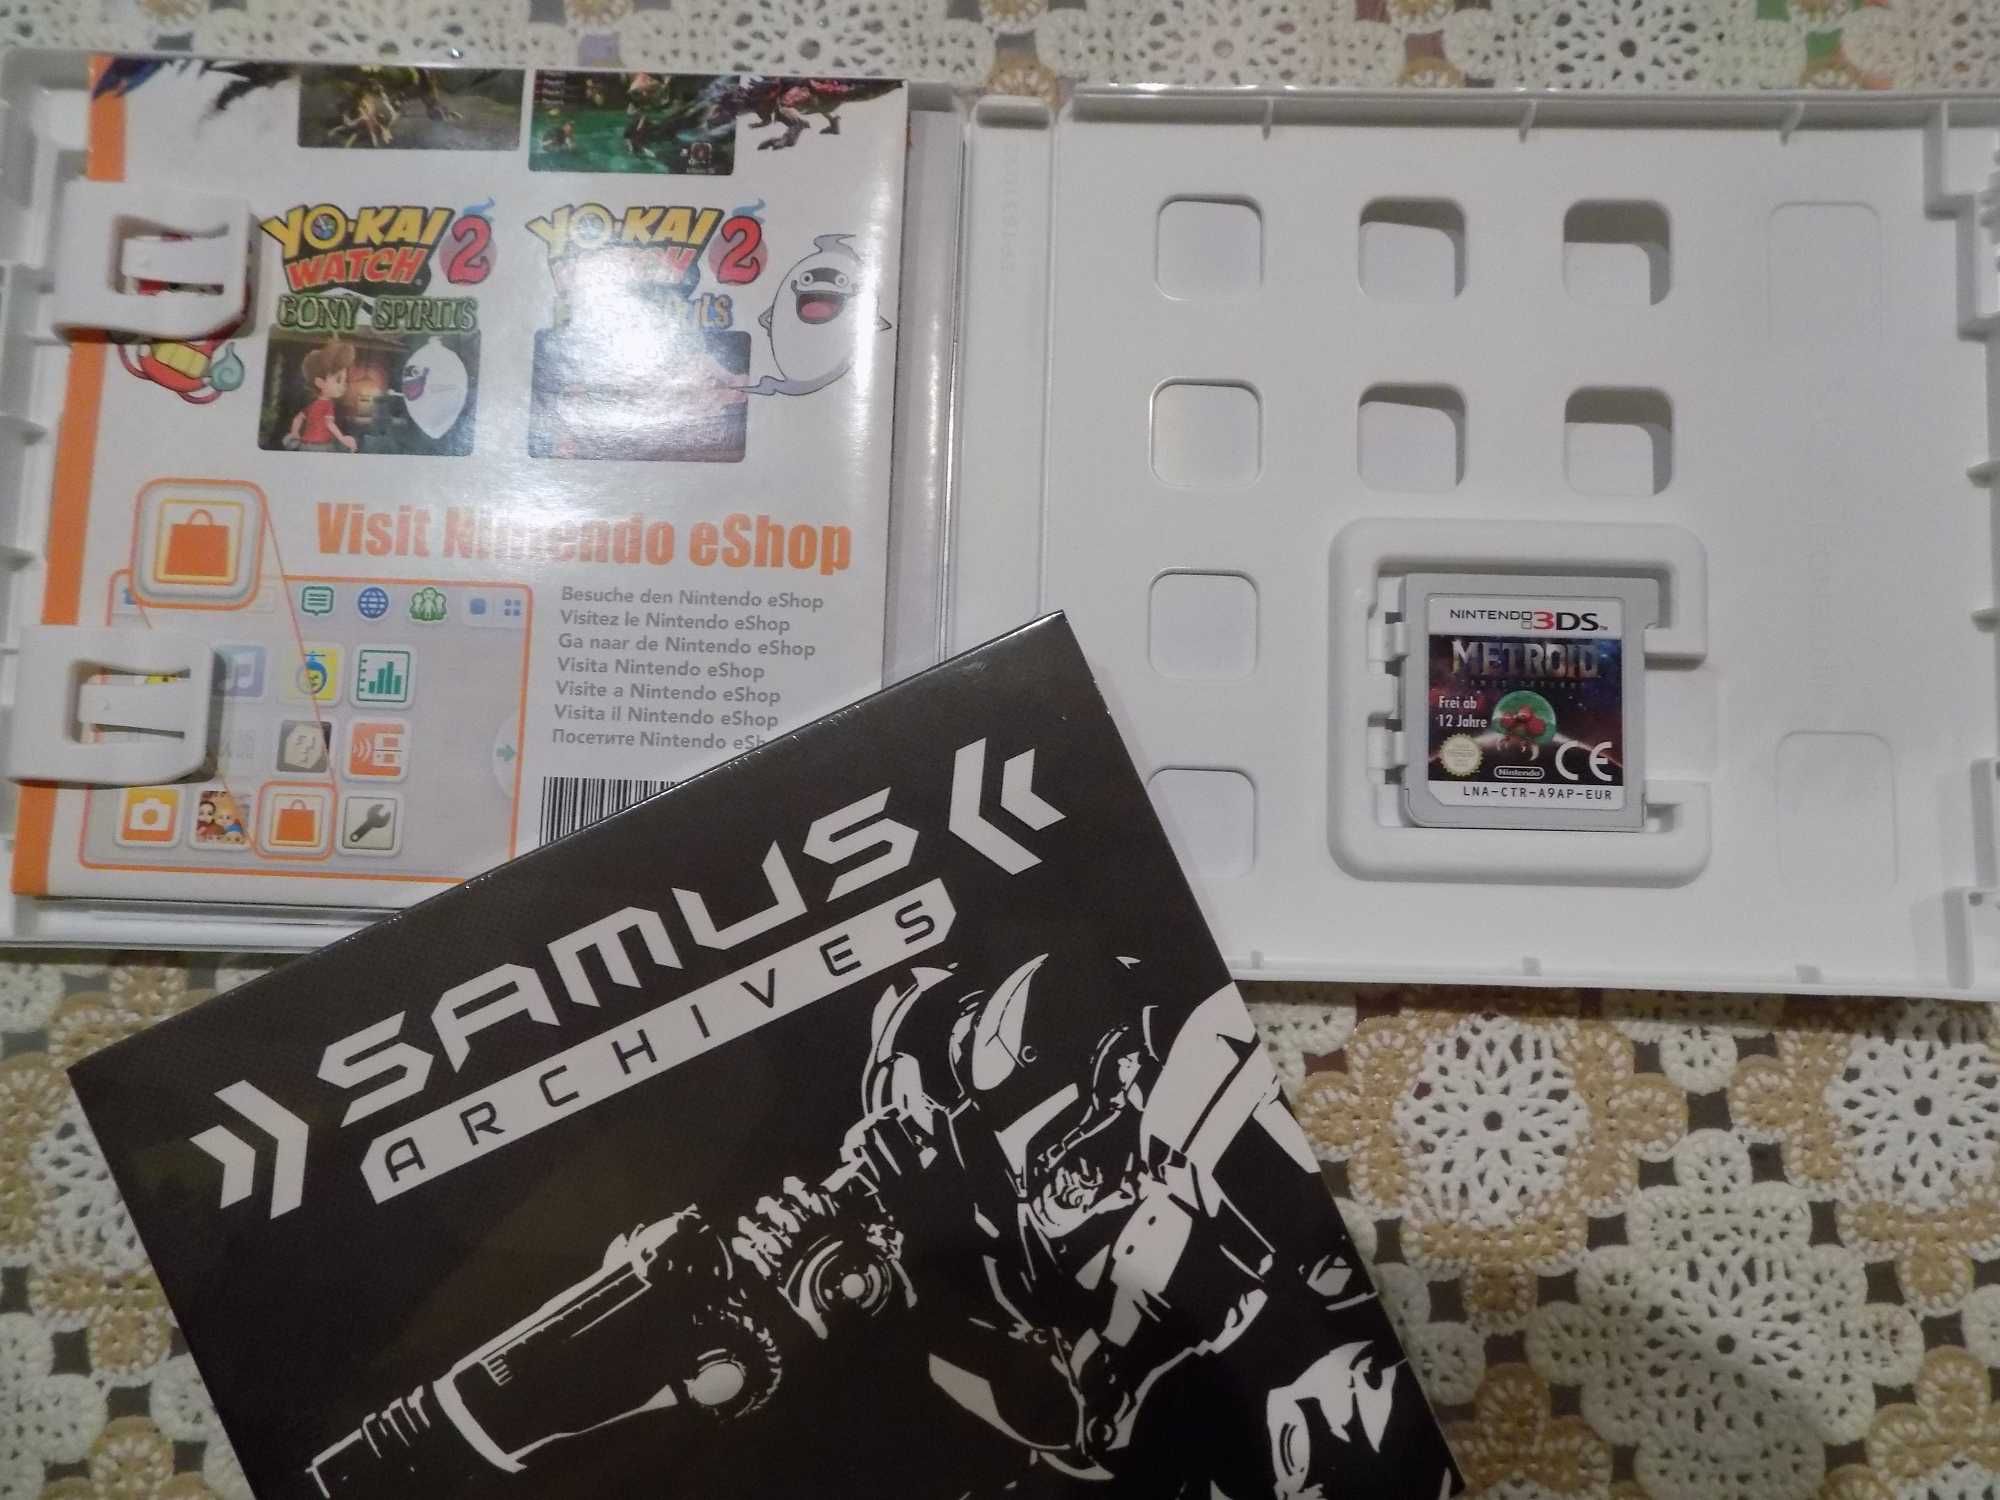 Metroid II Samus Returns Legacy Edition na Nintendo 3DS, idealny stan